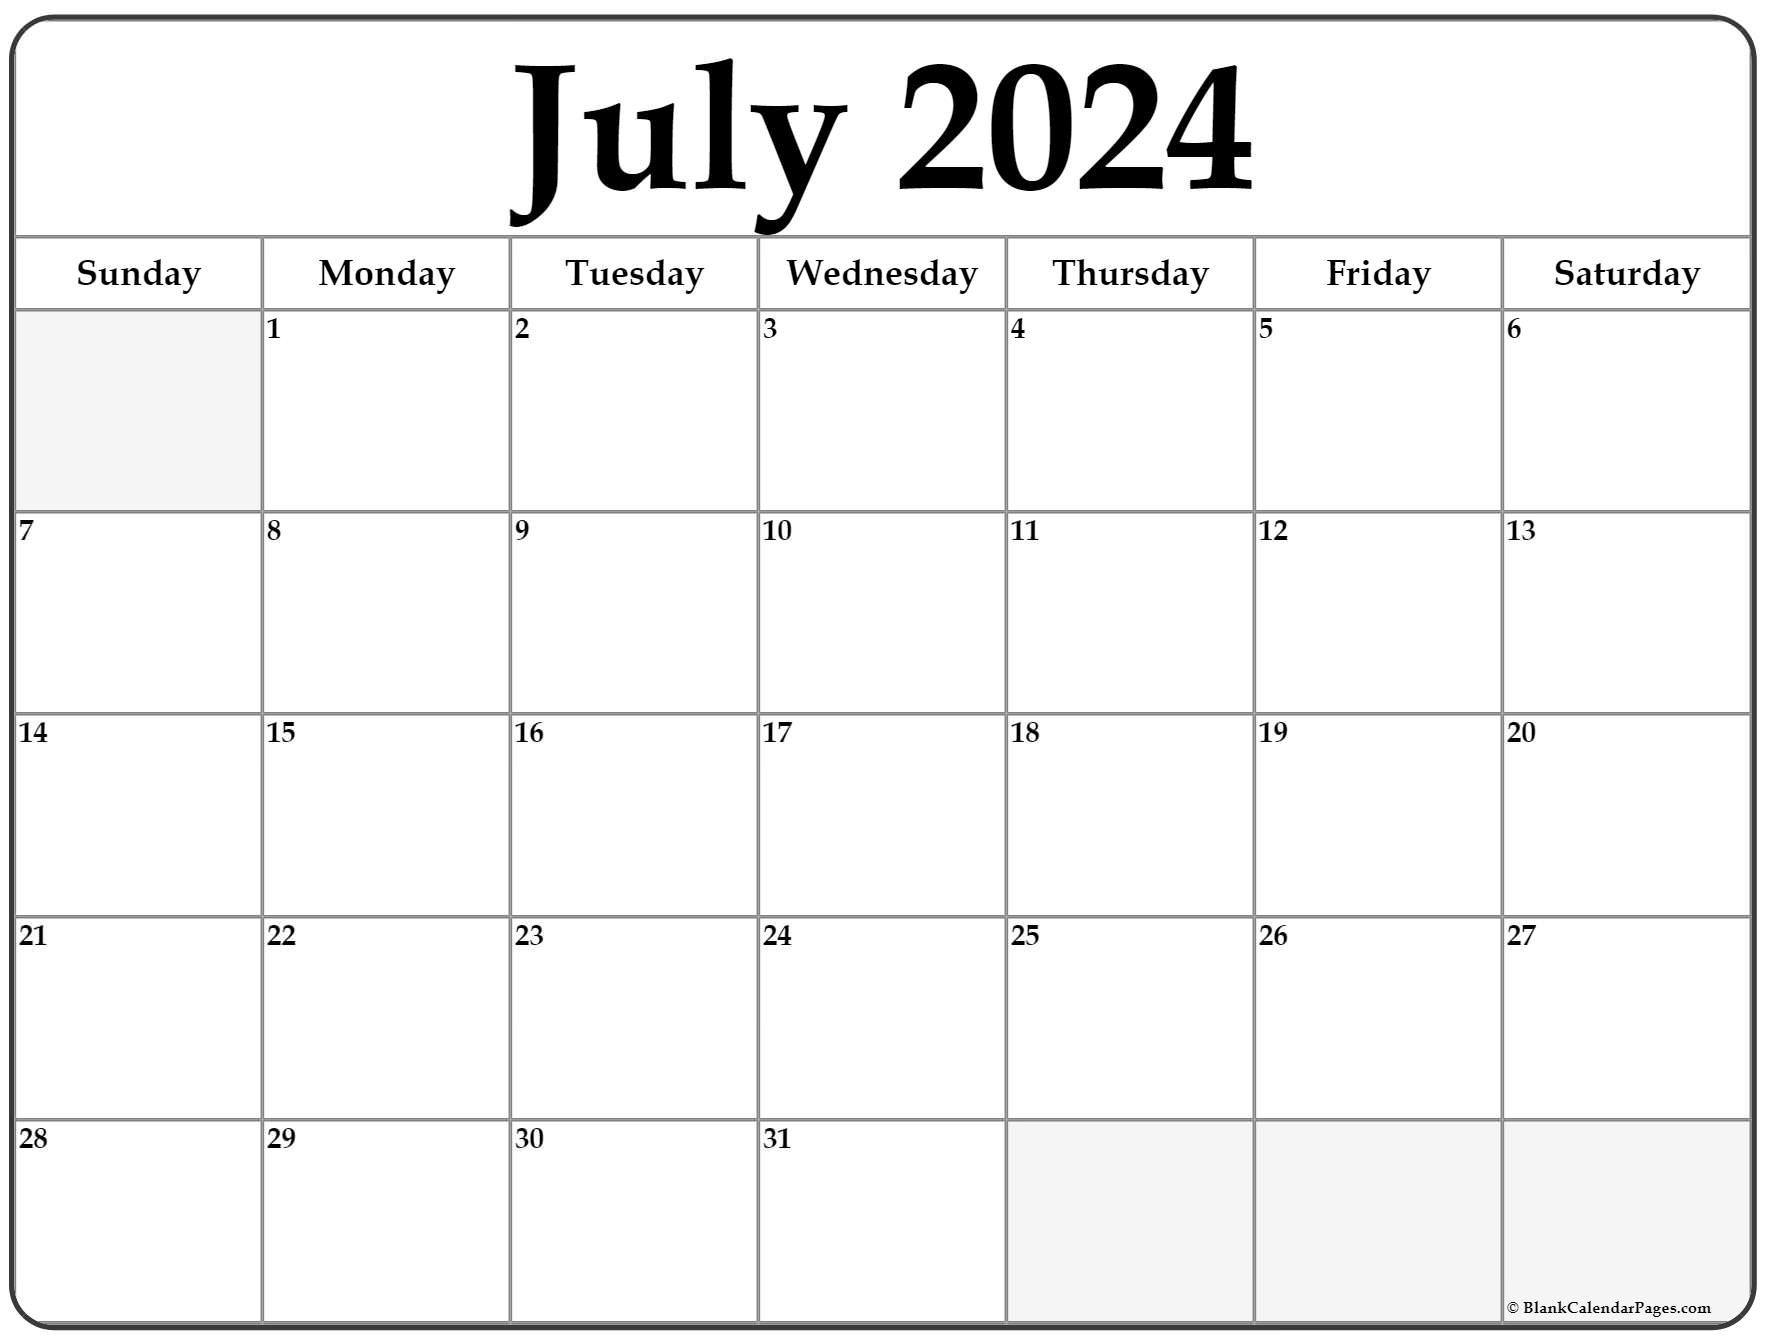 Free Printable July 2022 Calendar July 2022 Calendar | Free Printable Calendar Templates